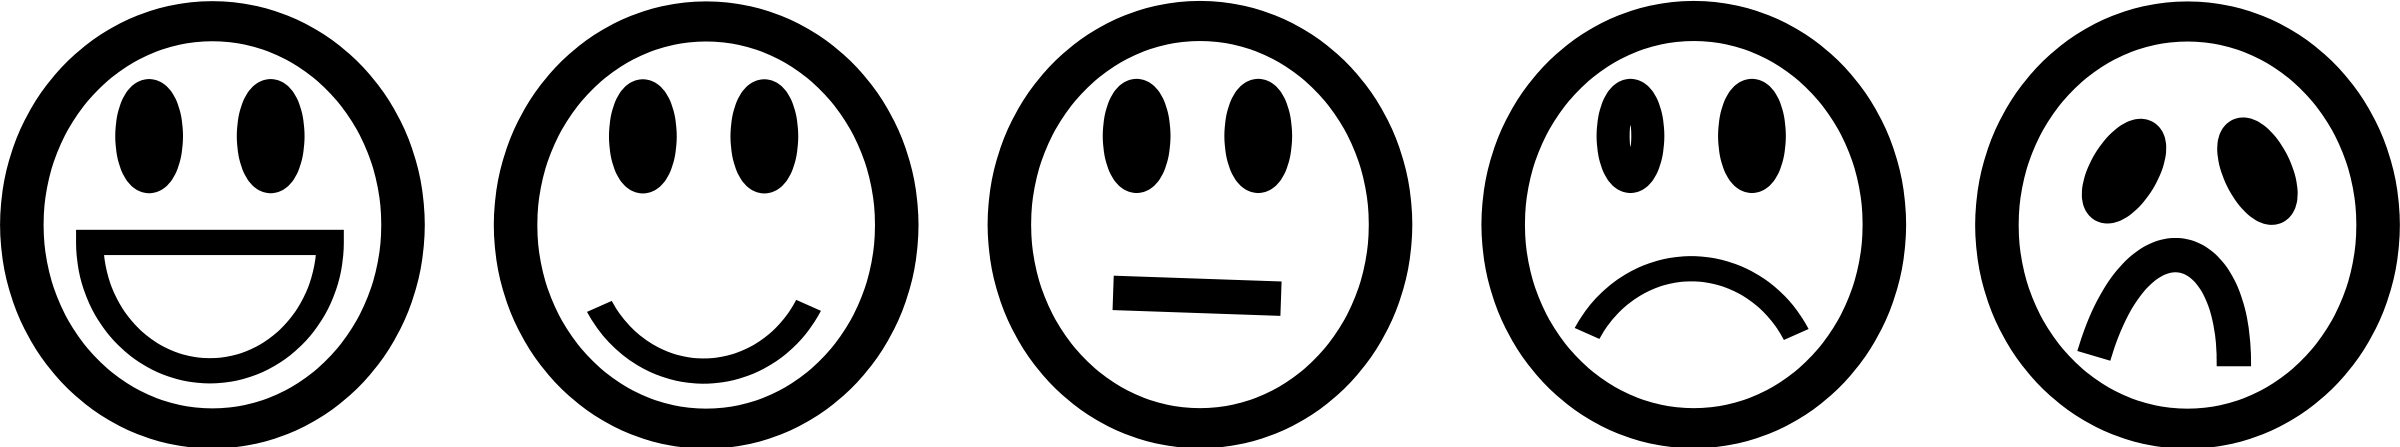 Bladk And White Sad Smiley Face Symbol 